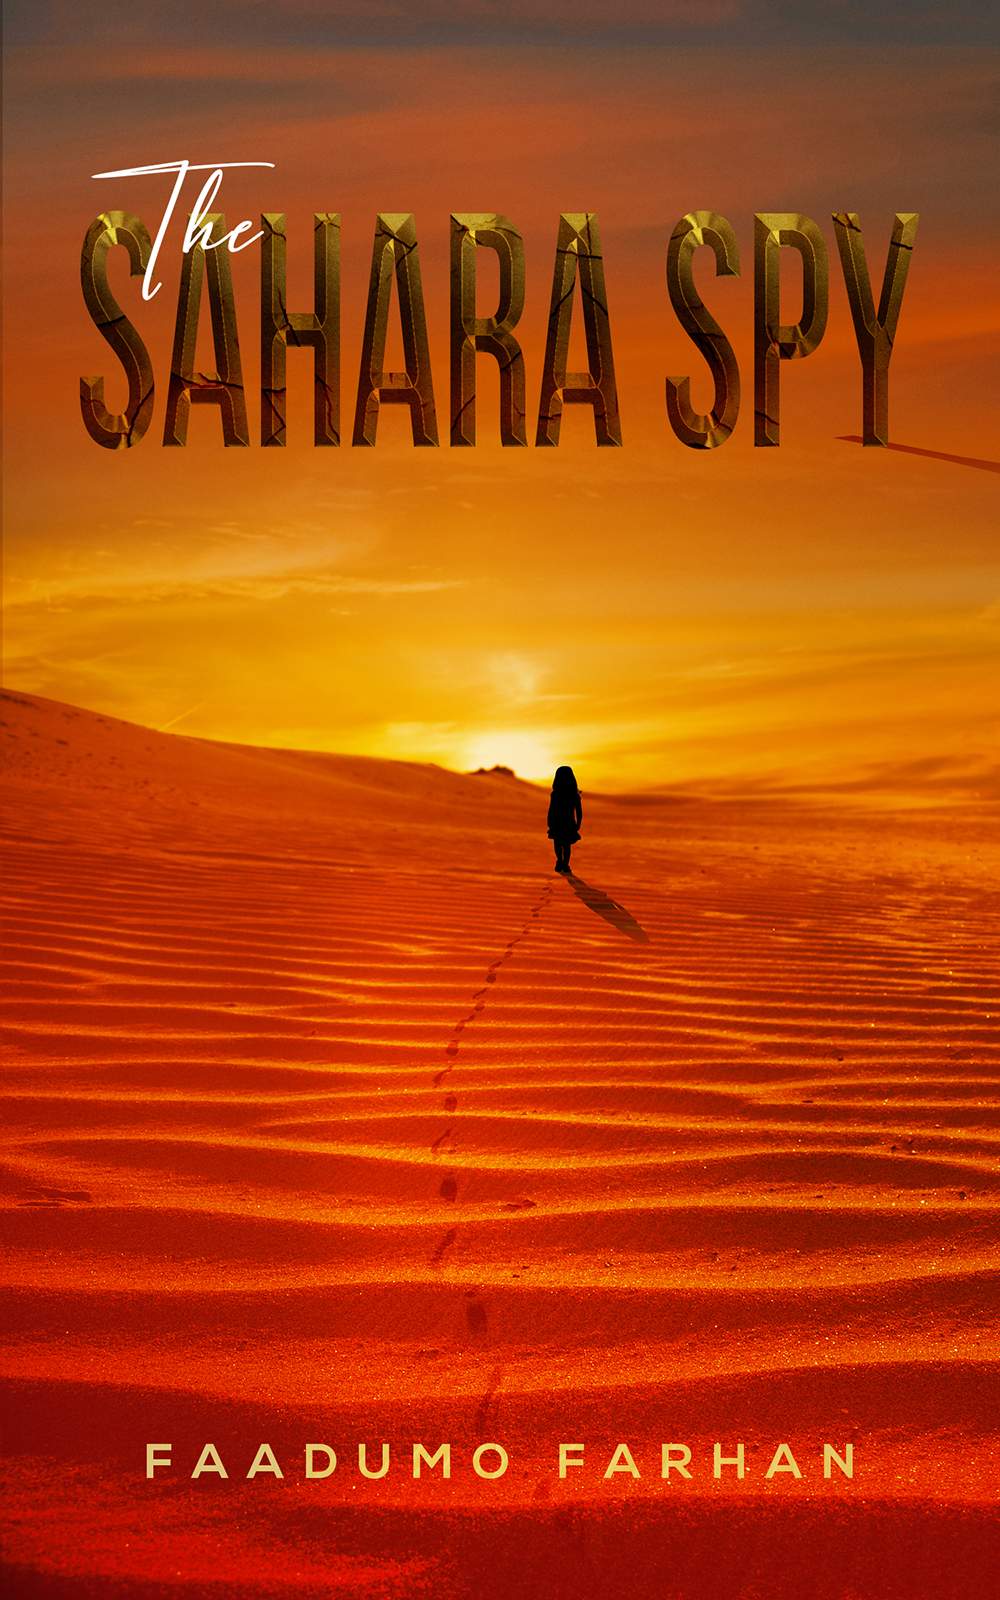 The Sahara Spy